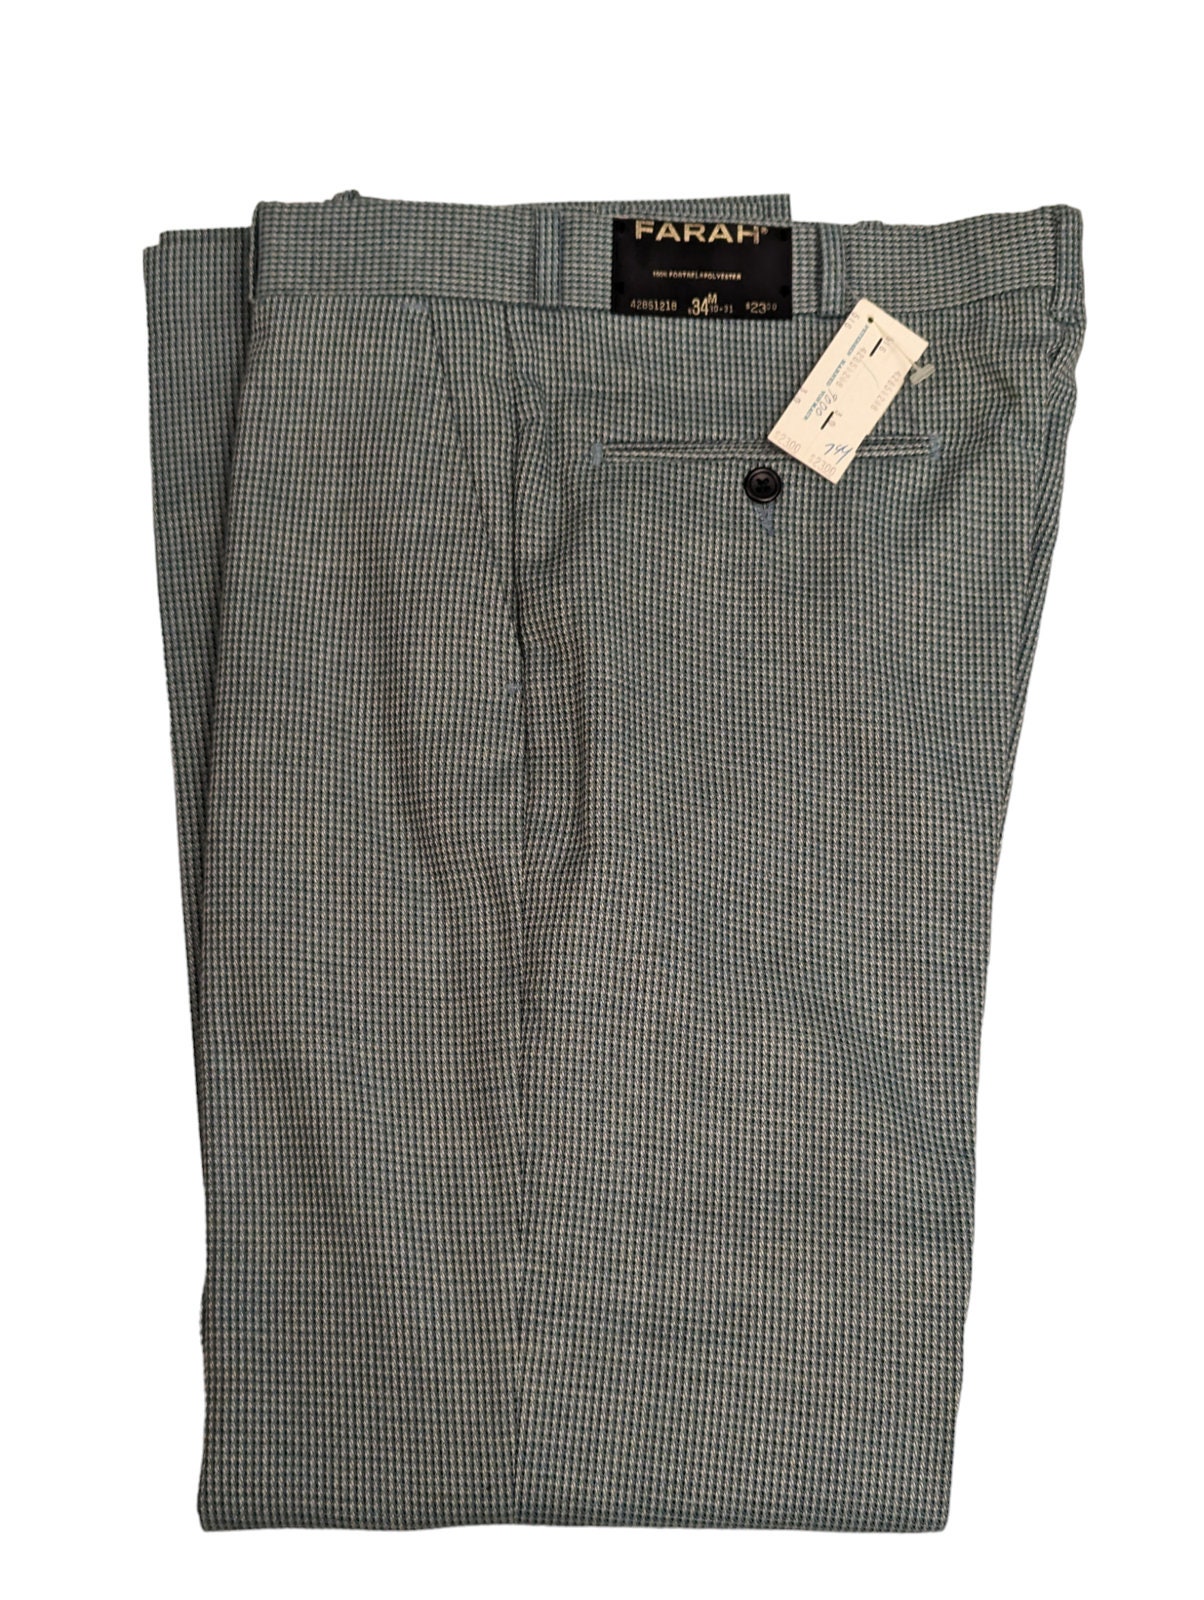 Farah Mens Formal Trousers Classic Lightweight Smart Trousers Grey 60W 27L  | eBay